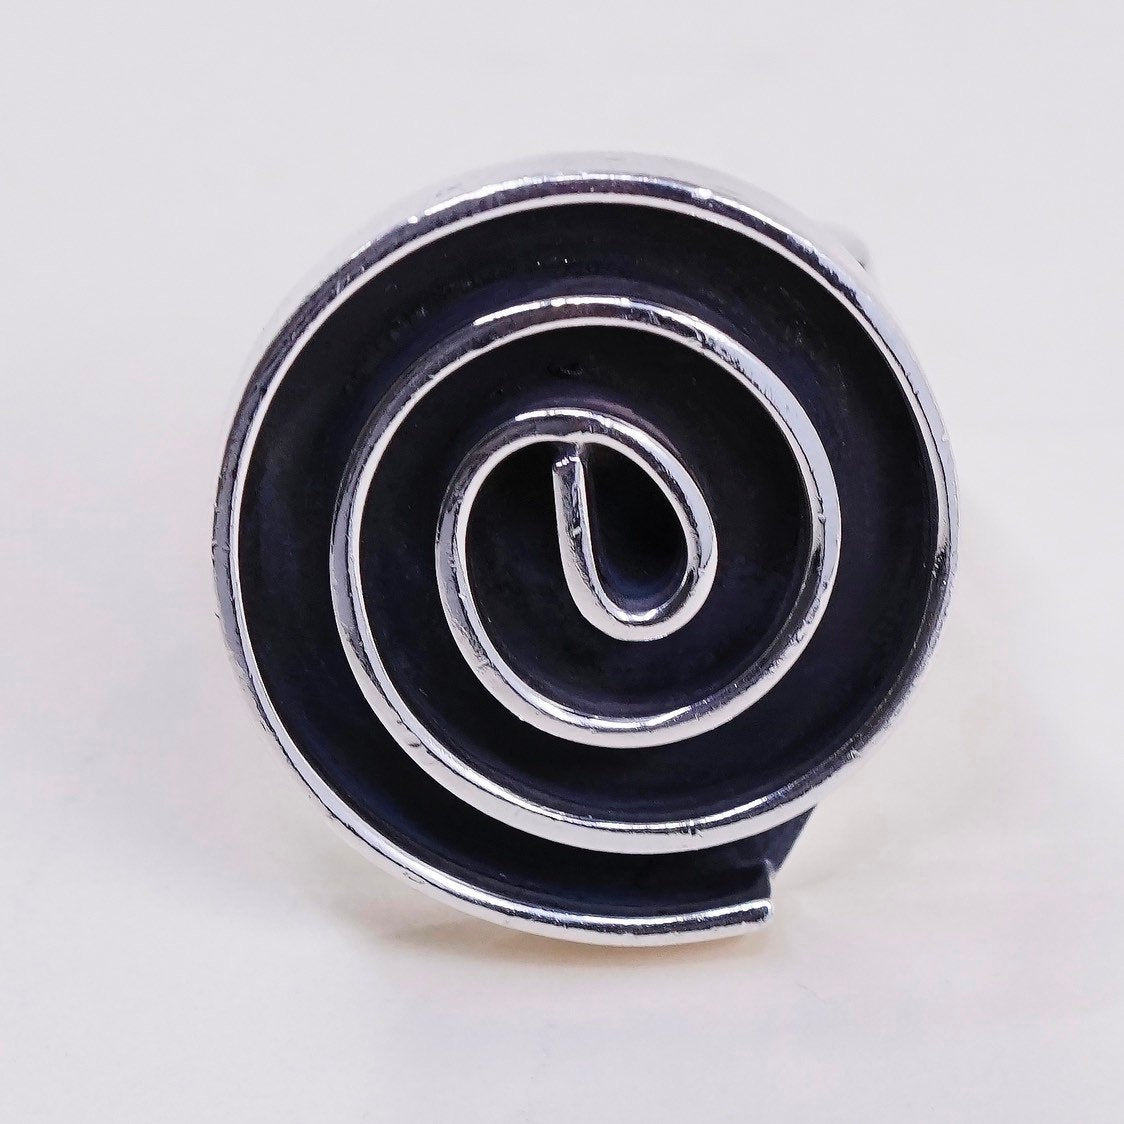 sz 7, vtg sterling silver handmade statement ring, mexico 925 swirl band